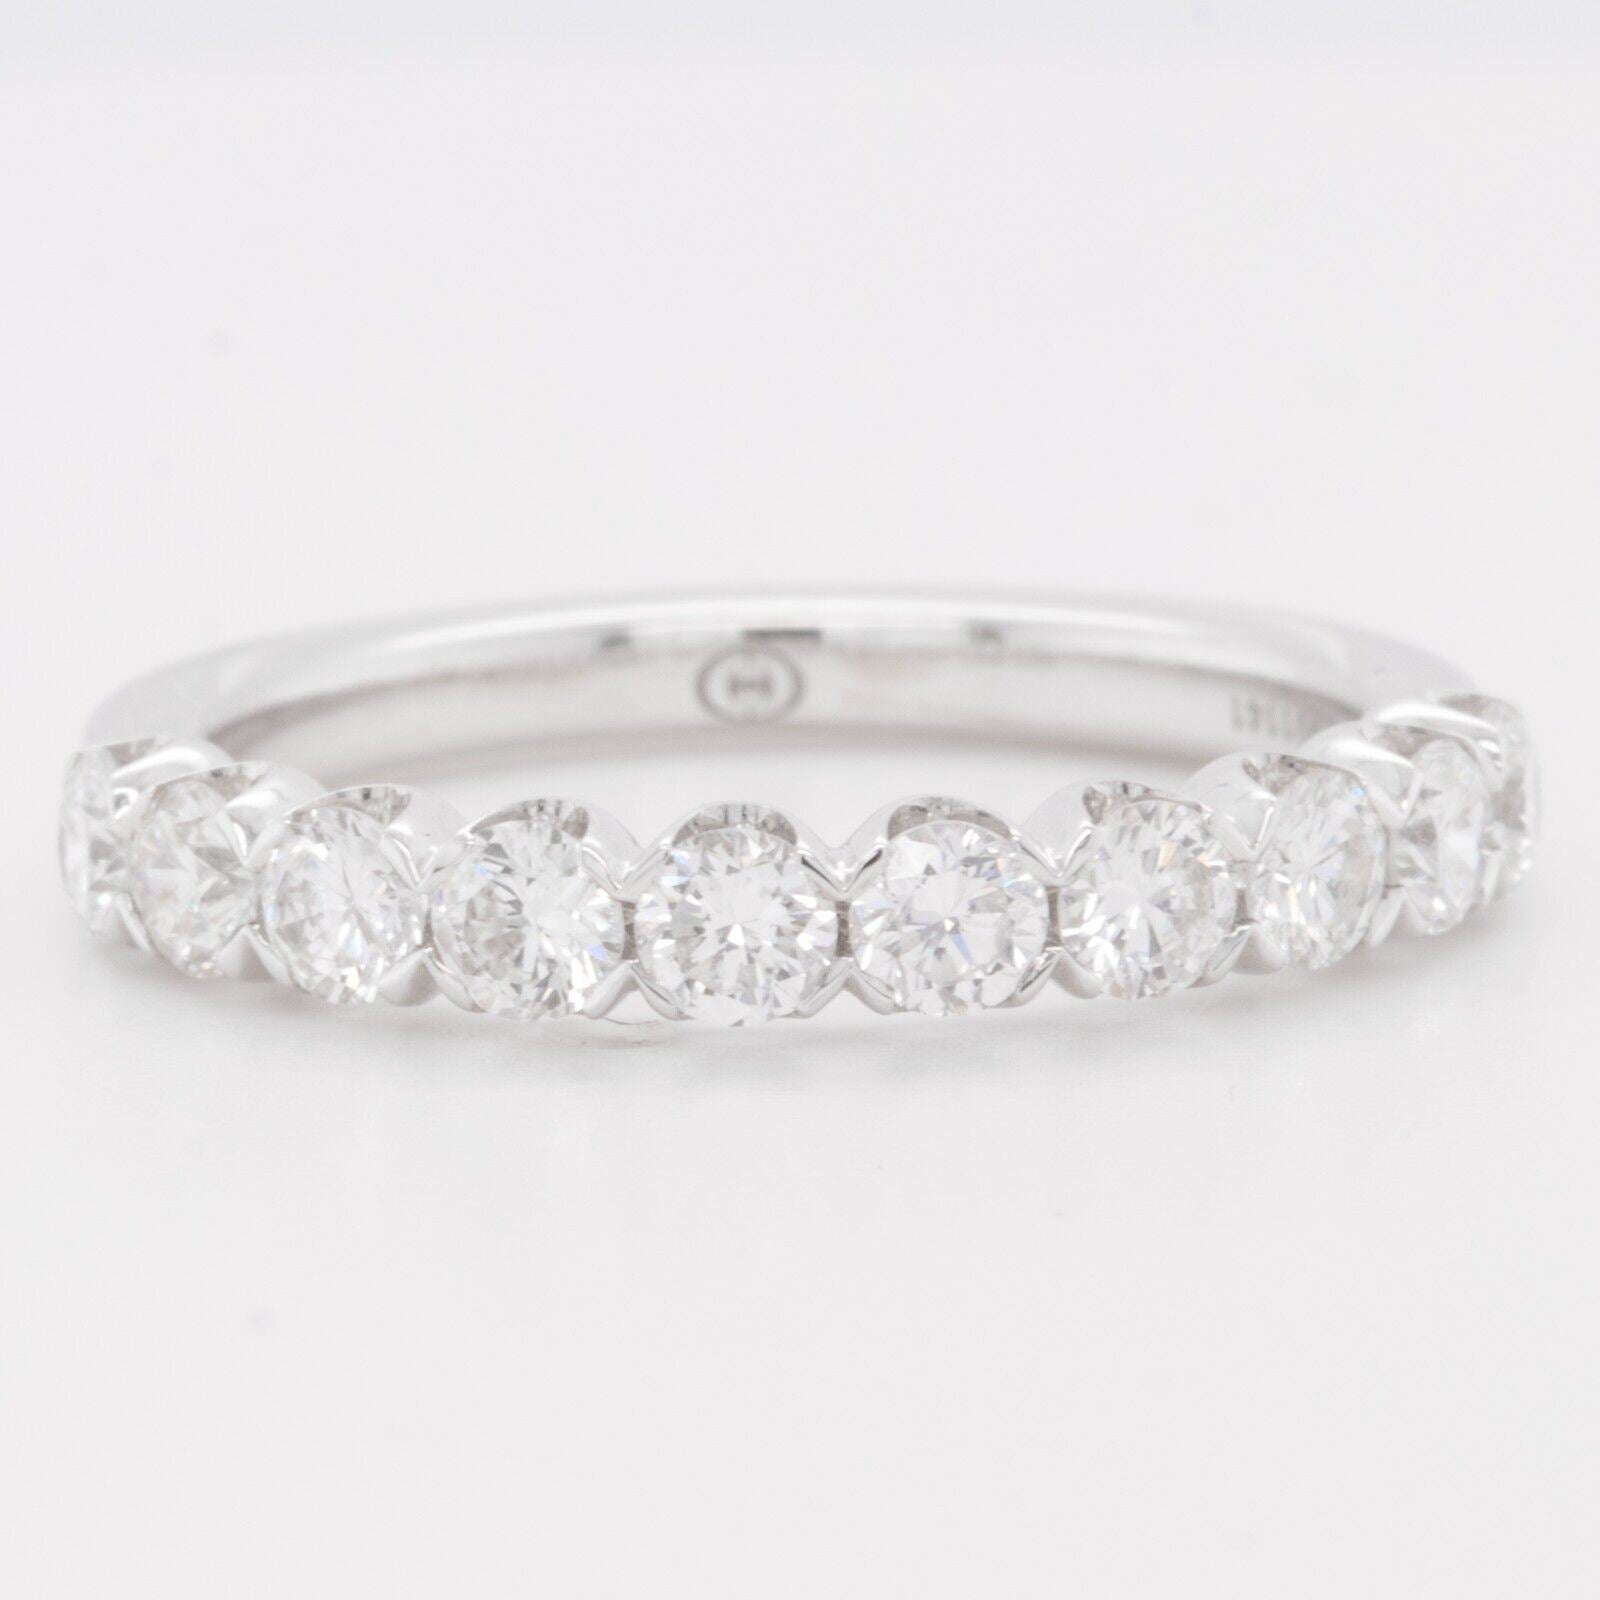 18k White Gold Diamond 10 Stone Wedding Band 1.03ctw F-G VS1 Ring Size 7